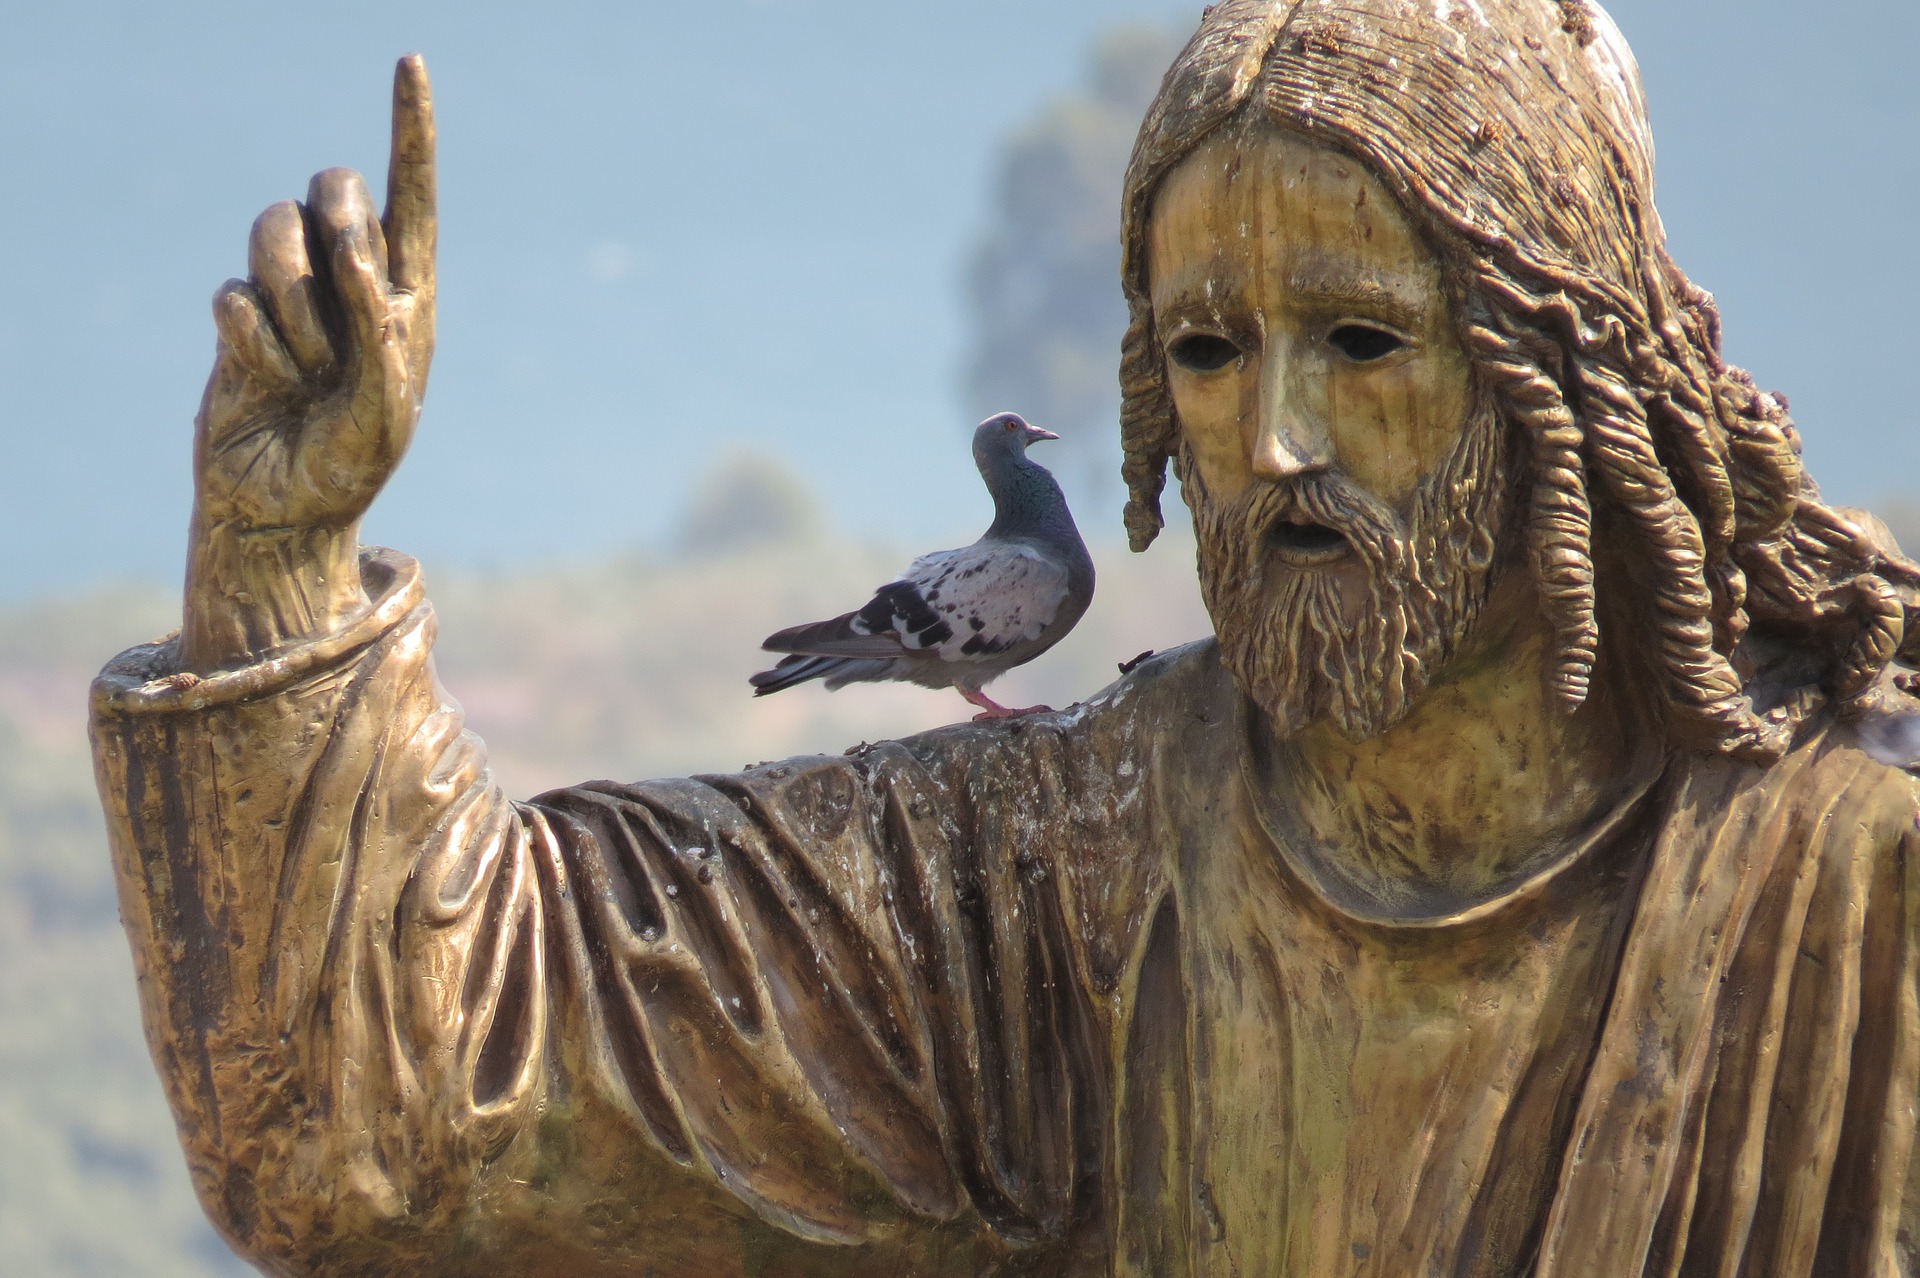 Jesus Christ teaching a bird